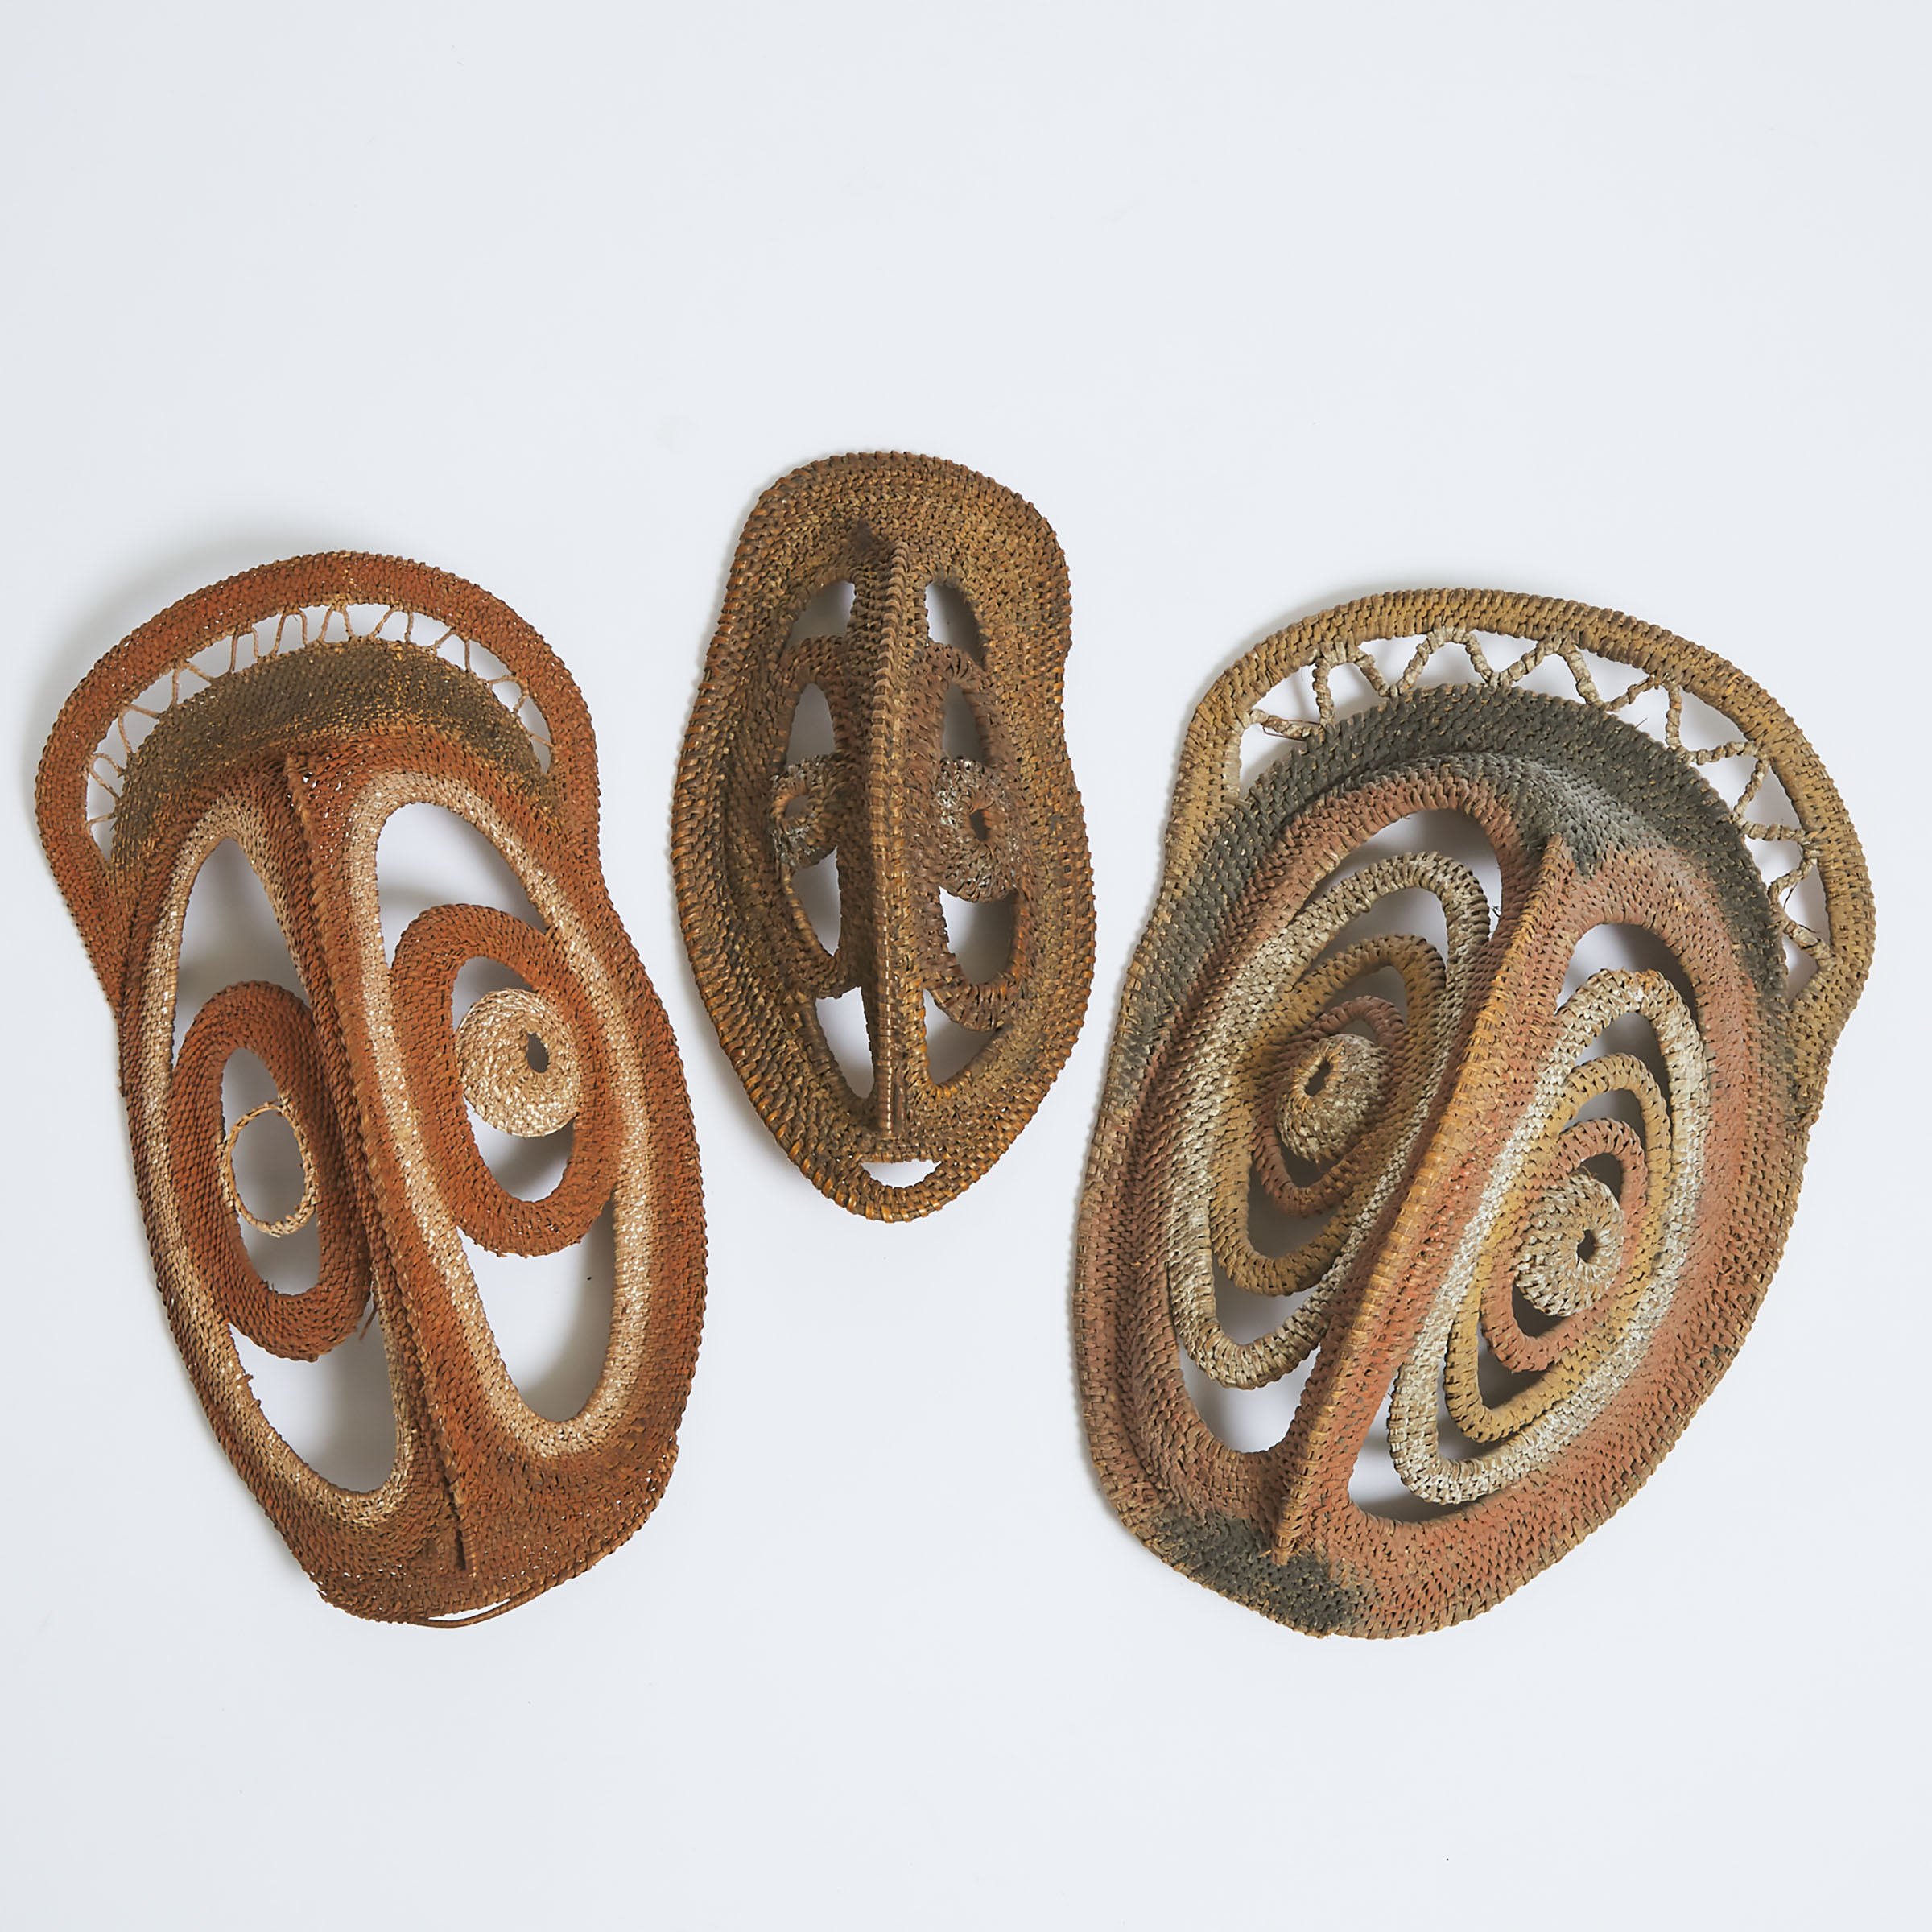 Three Yam Masks, Papua New Guinea, 20th century